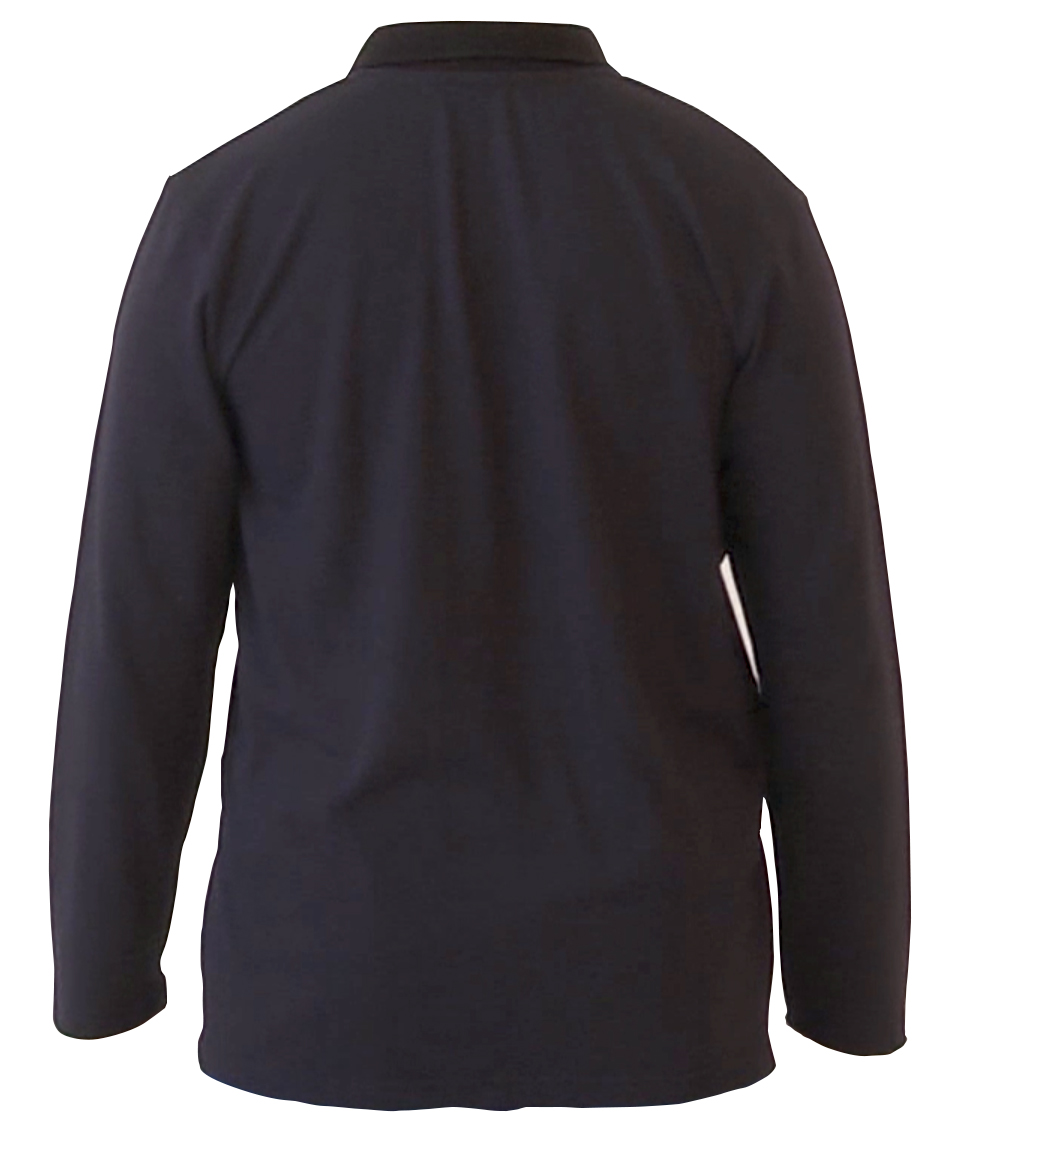 ESD Polo-Shirt Back AQGZ Style Black Unisex 5XL Antistatic Clothing ESD Garment - 473.AQGZ-APS21-BK5